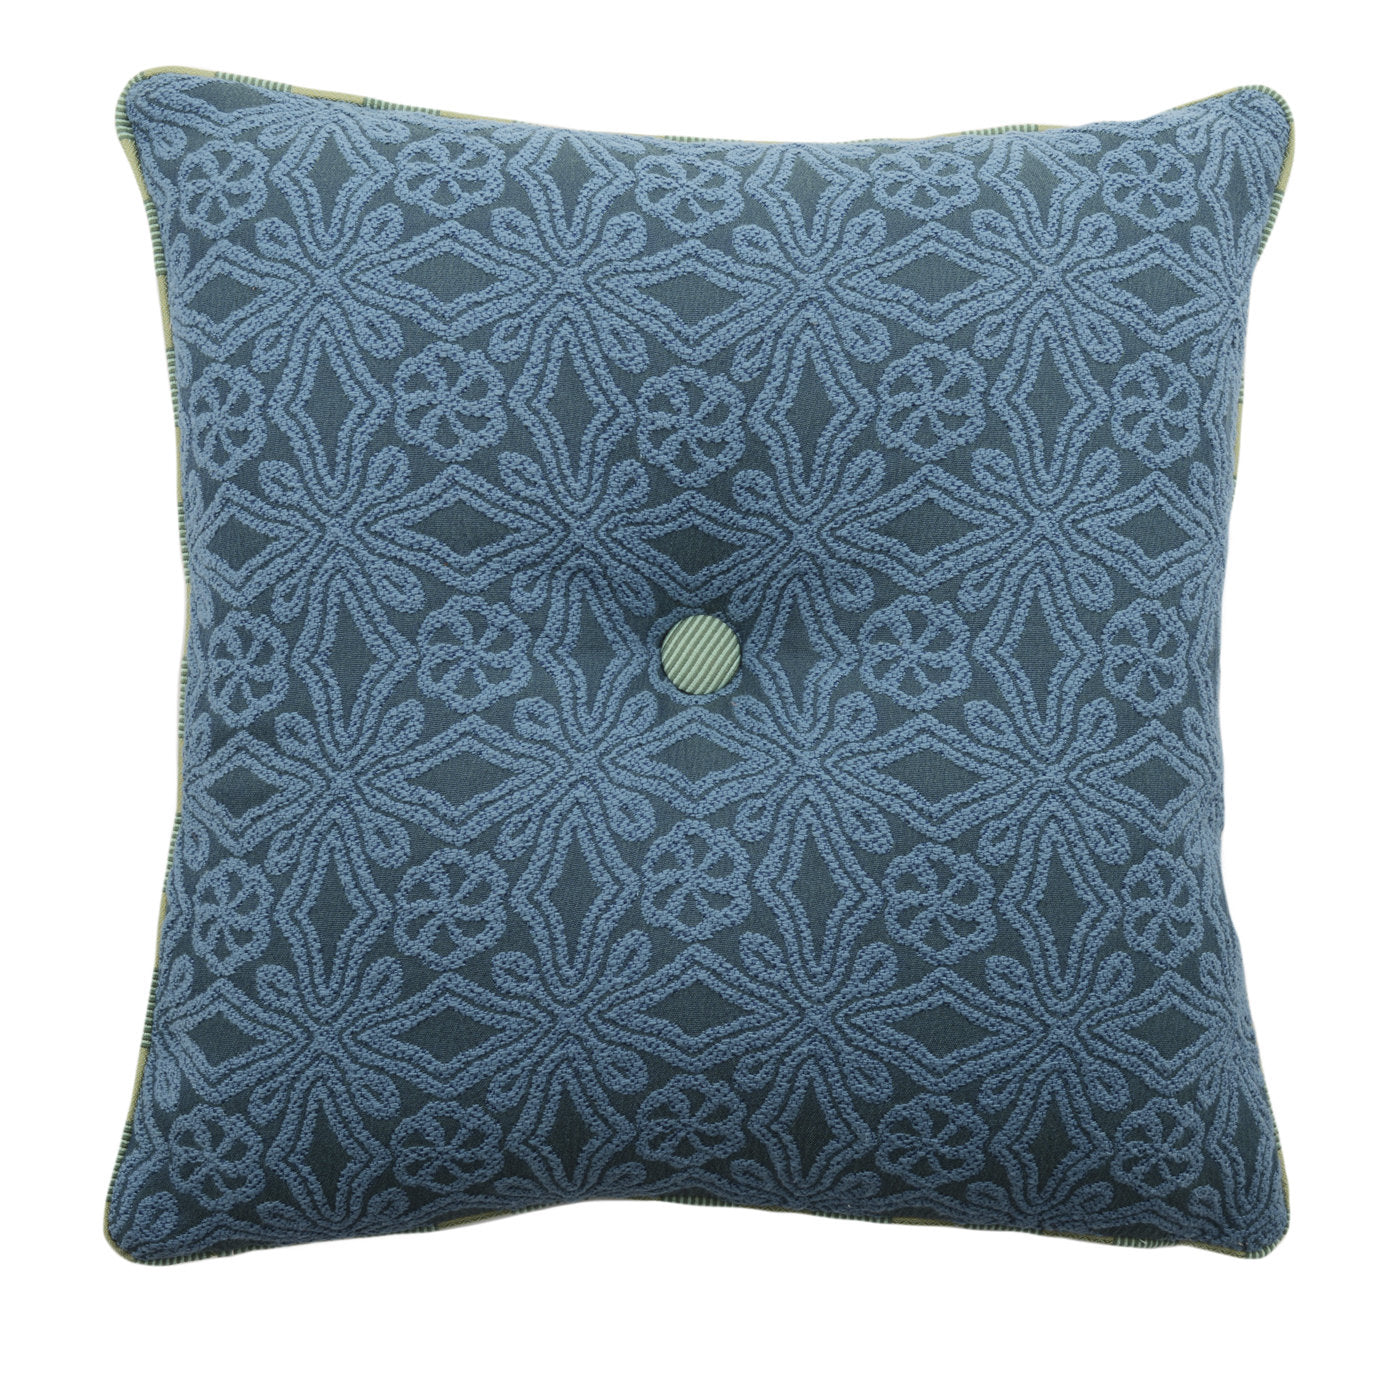 Light Blue Carré Cushion in floreal jacquard fabric - Main view